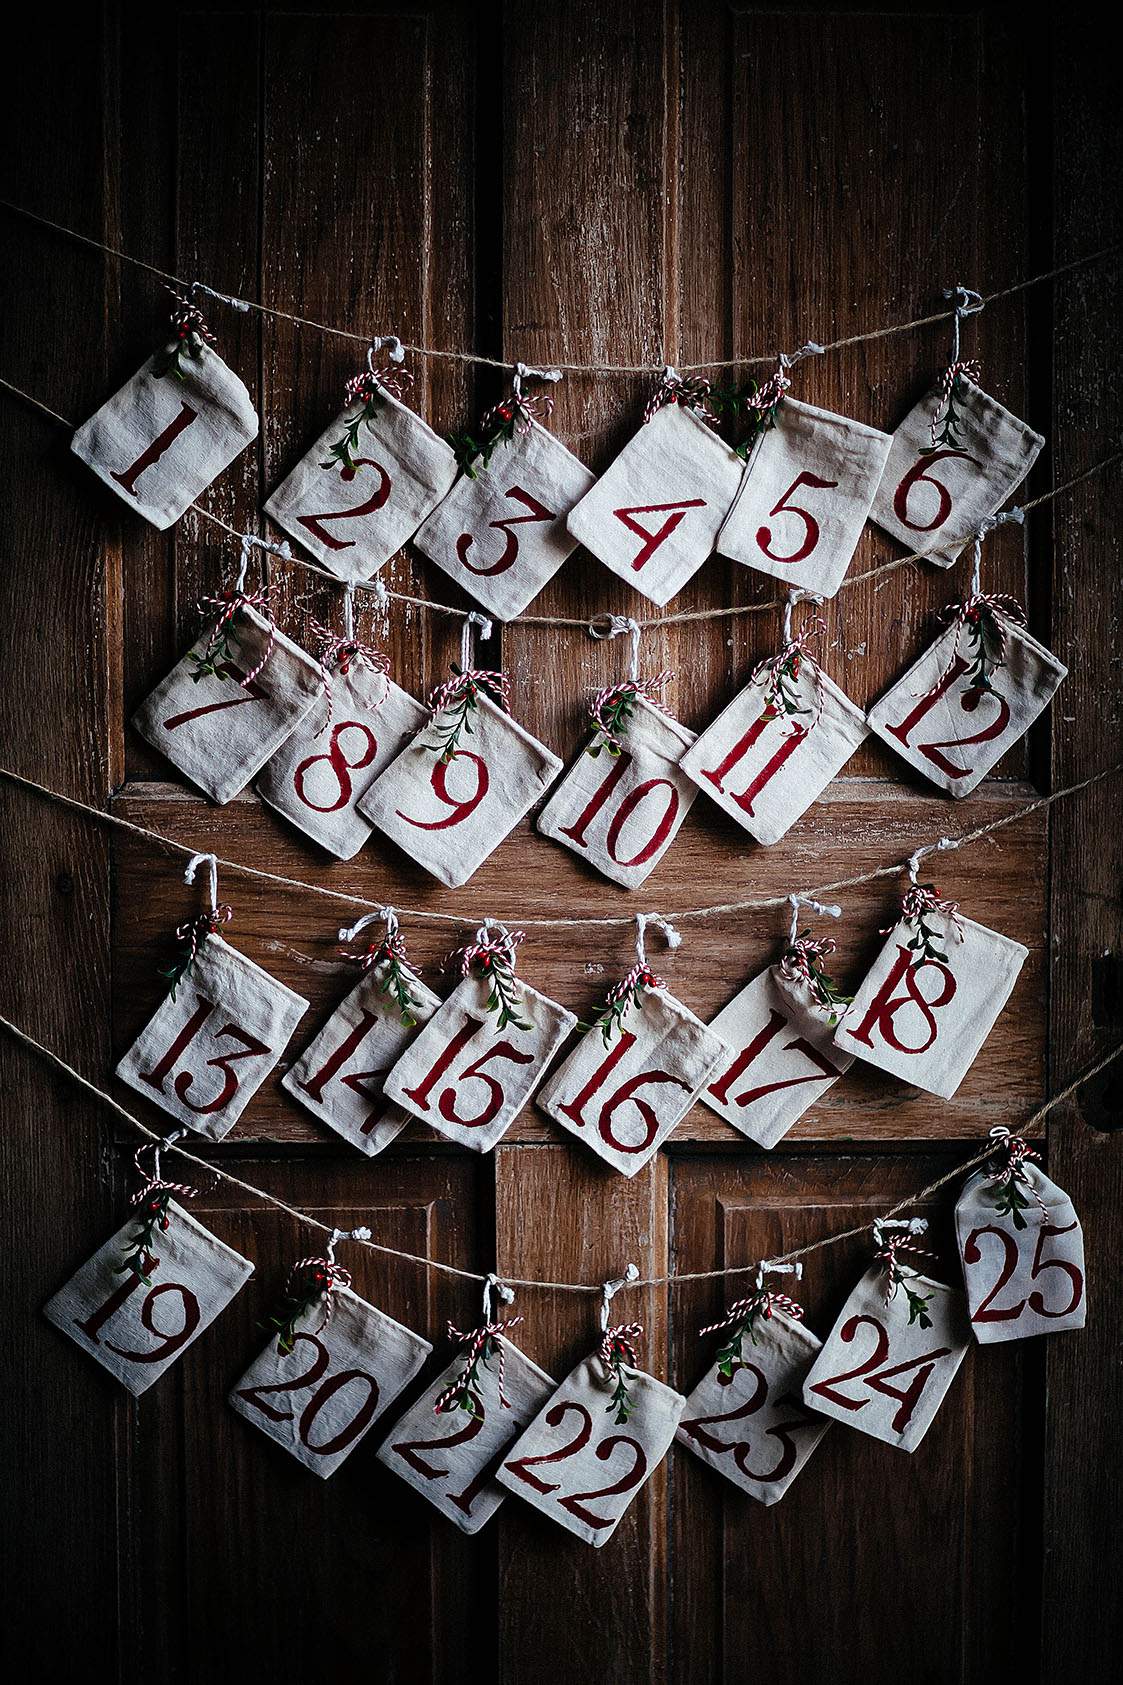 Advent Calendar Bags,24 Christmas Calendar Bag,DIY Make Your Own Advent Calendar,Countdown to Christmas Fillers Bags with Drawstring for Christmas Decoration. TYP1